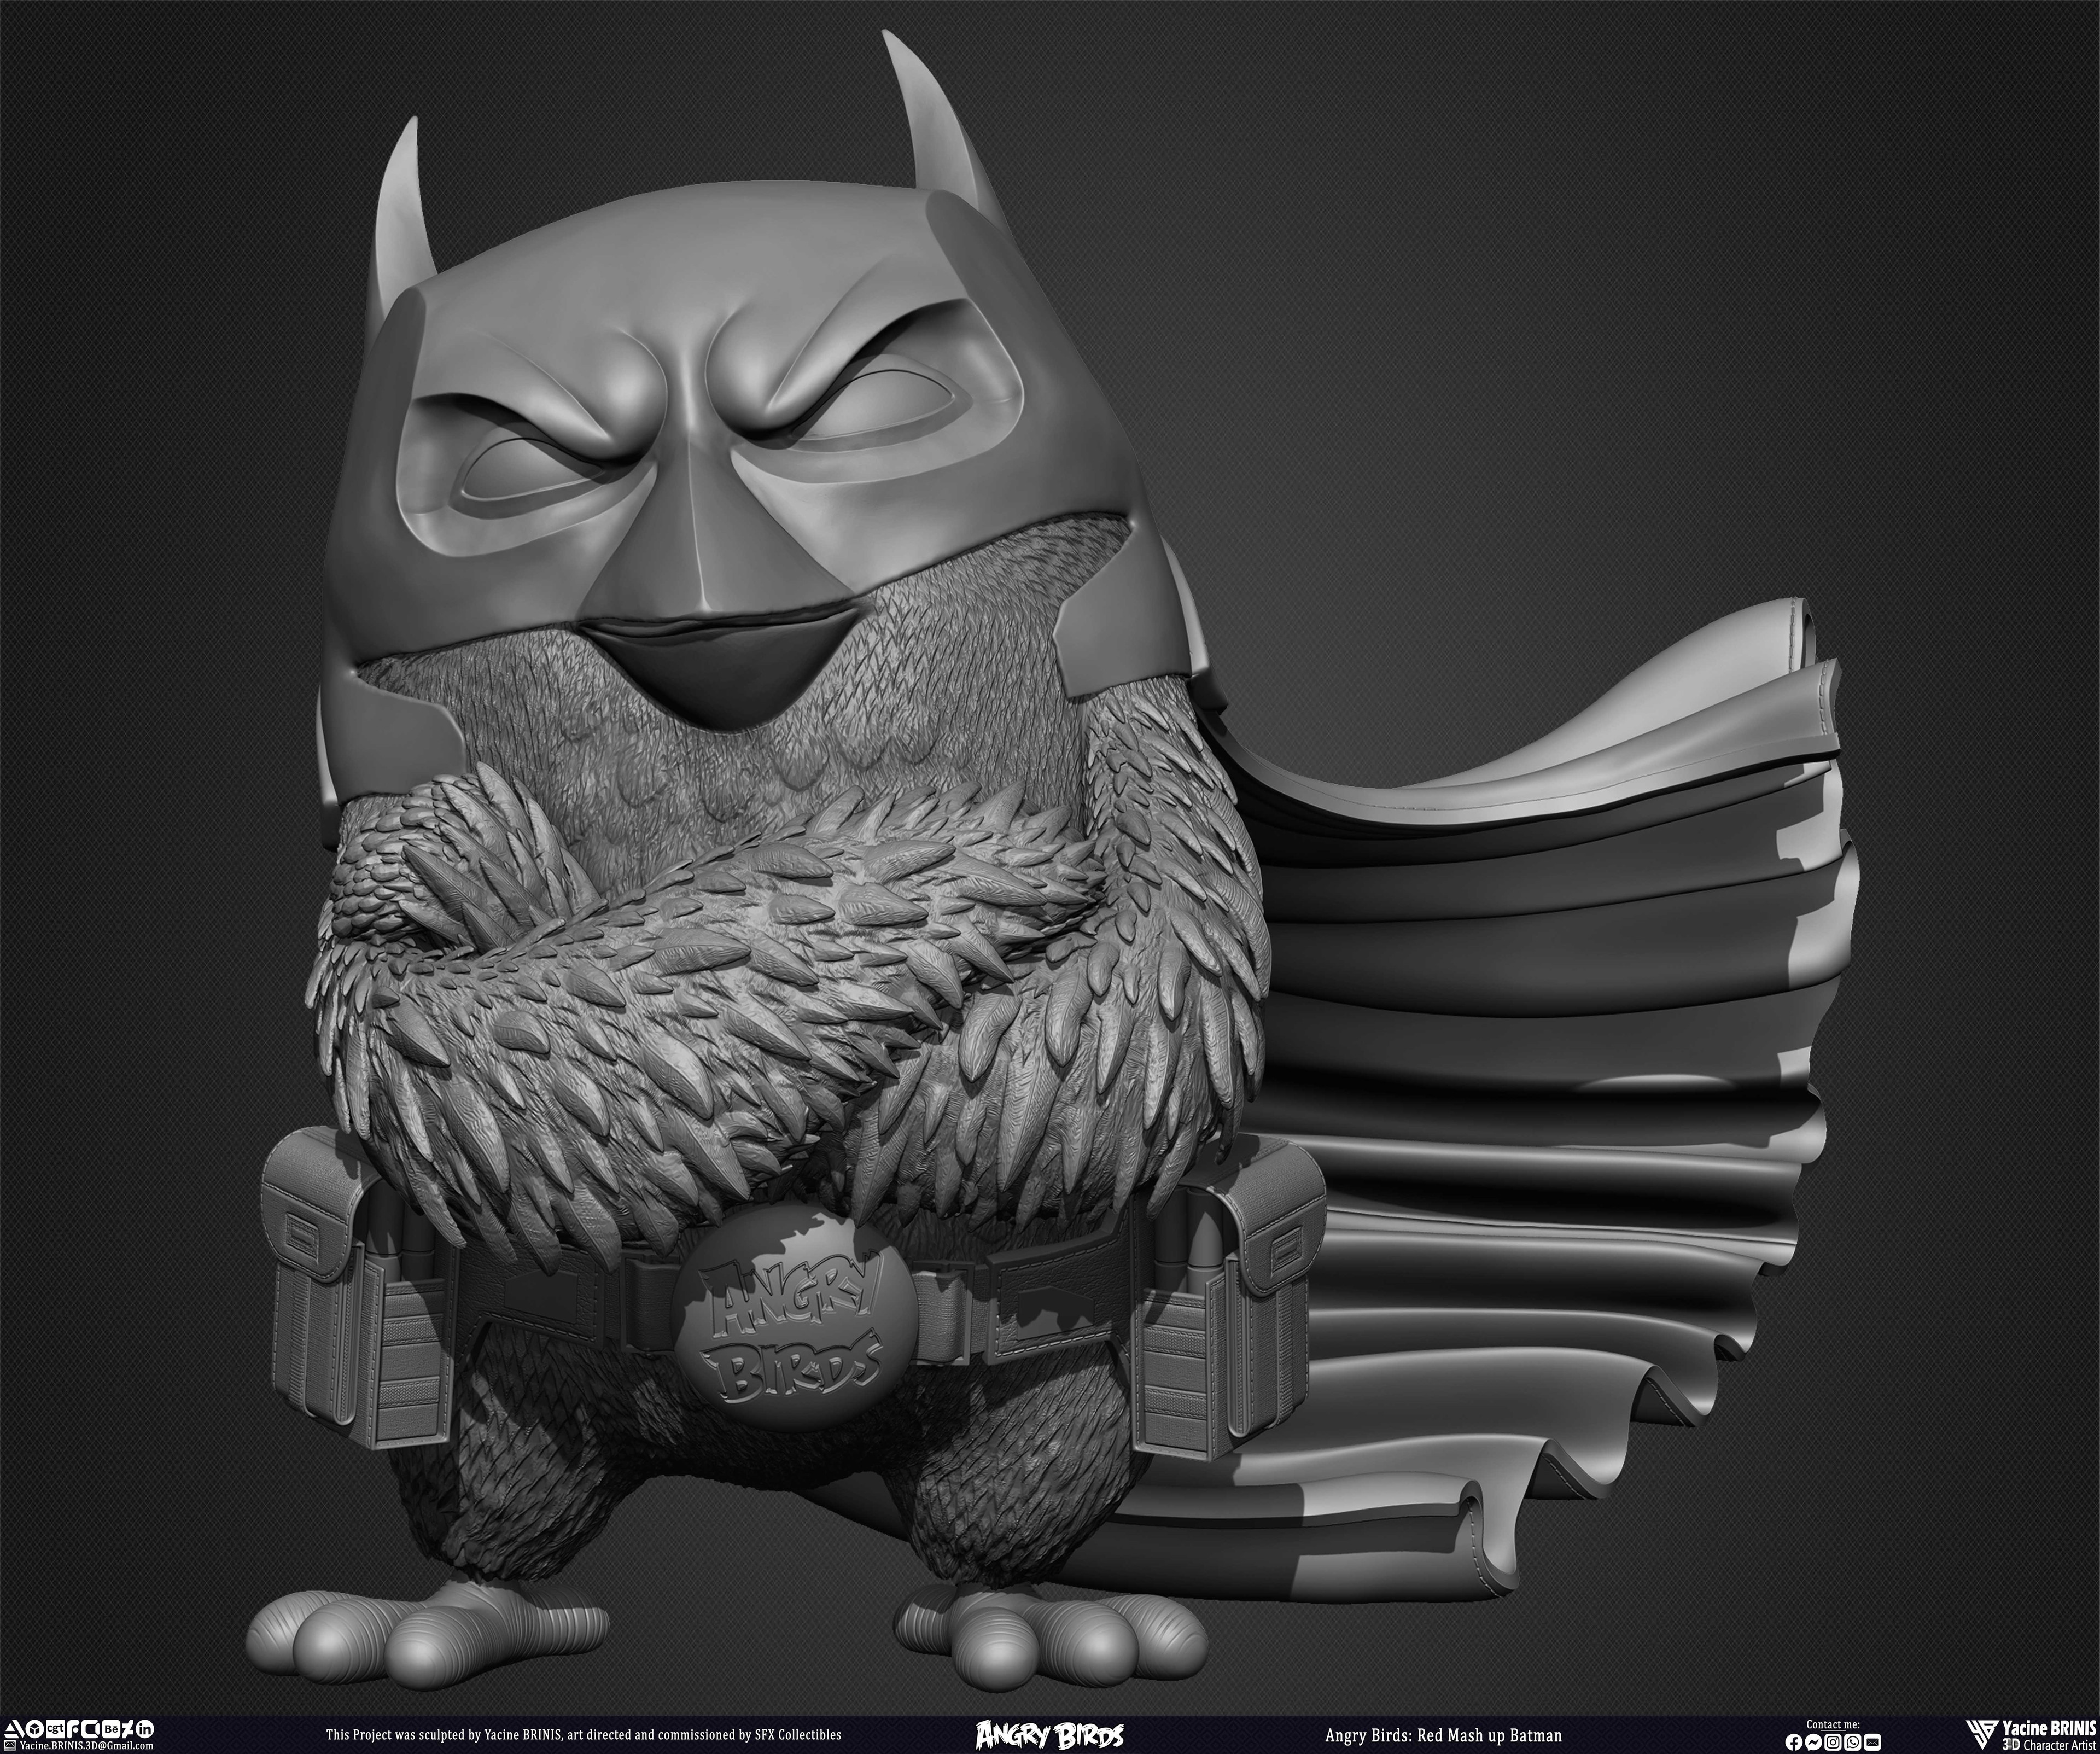 Red Mash Up Batman Angry Birds Movie 02 Rovio Entertainment sculpted by Yacine BRINIS 006